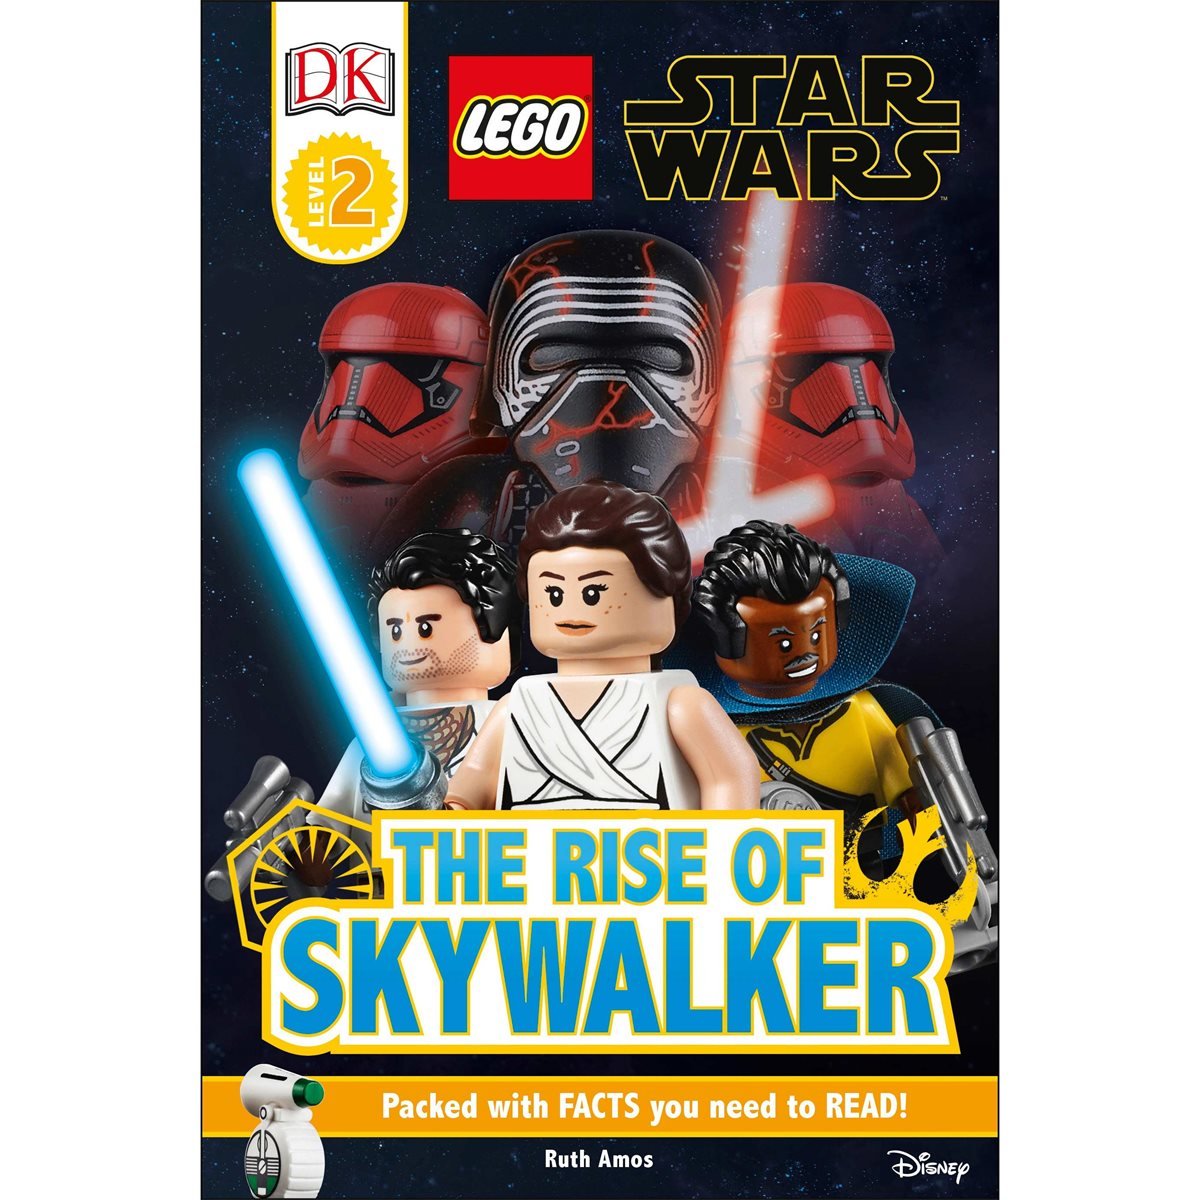 LEGO Wars The Rise of Skywalker DK Readers Level 2 Hardcover Book